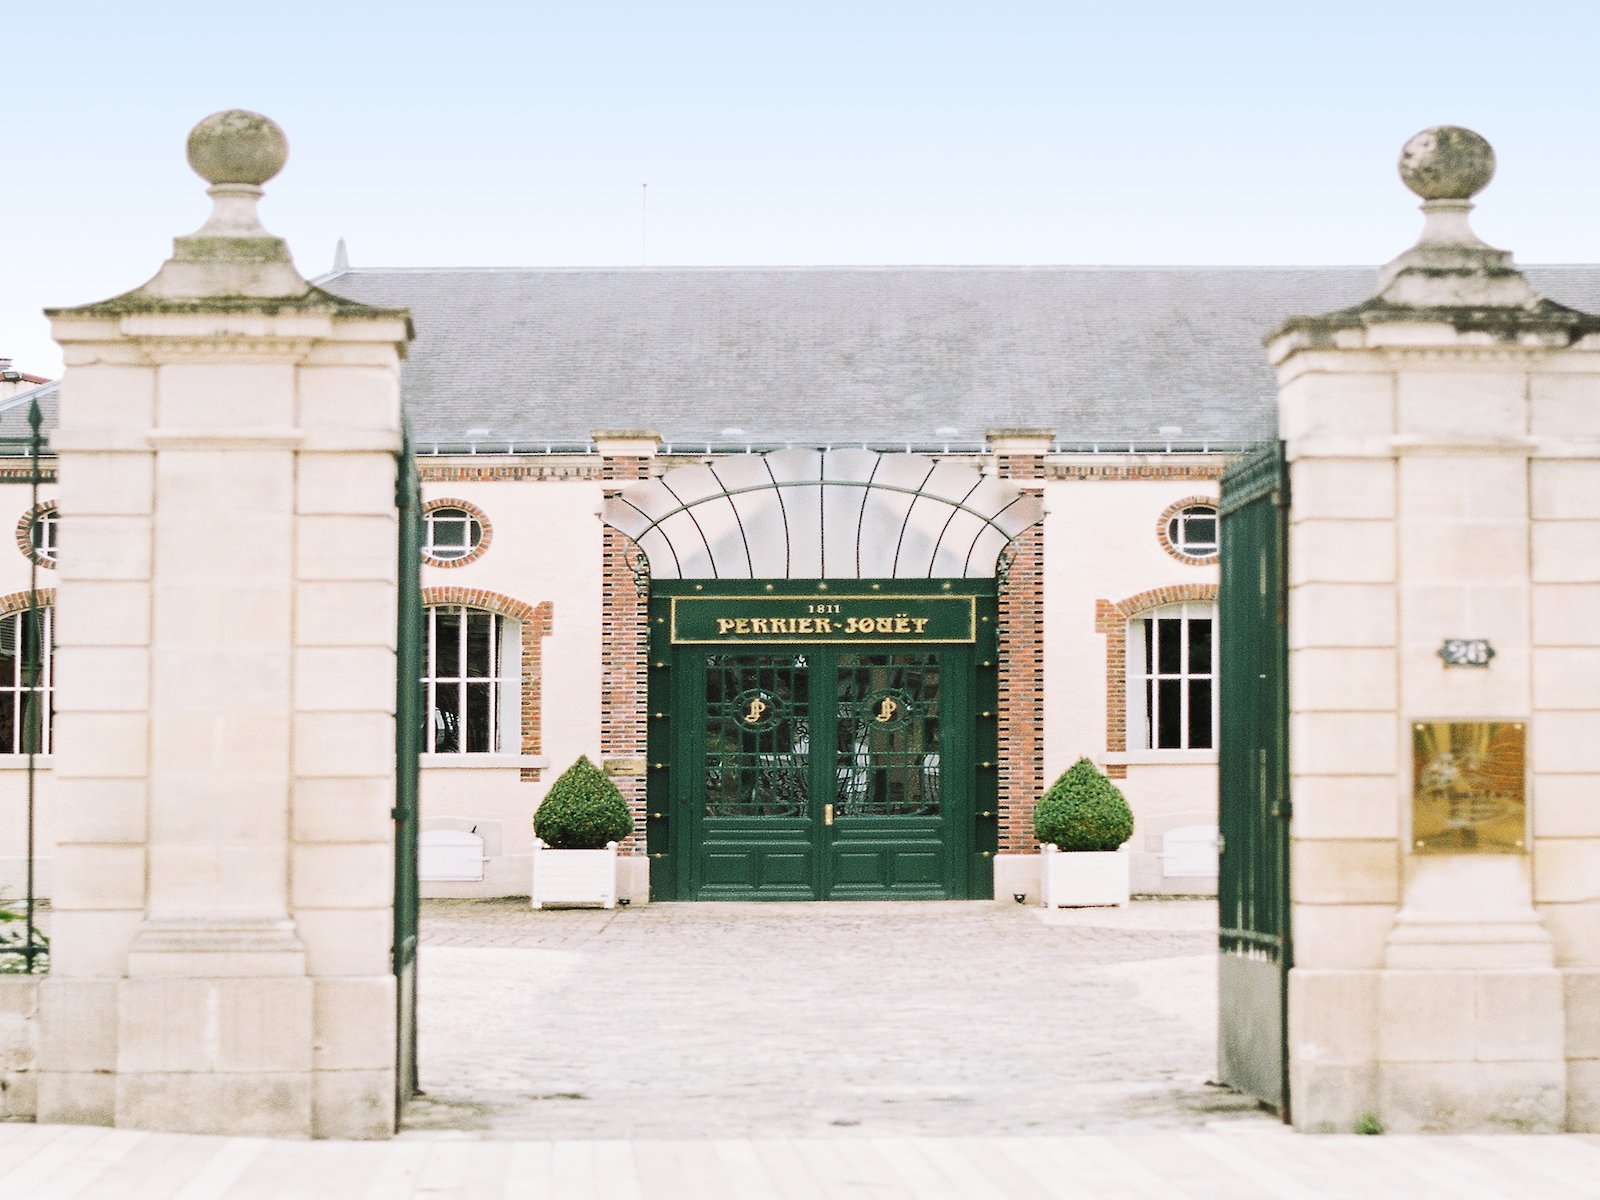 Maison Perrier-Jouët Unveils an Exceptional Collection of Vintages